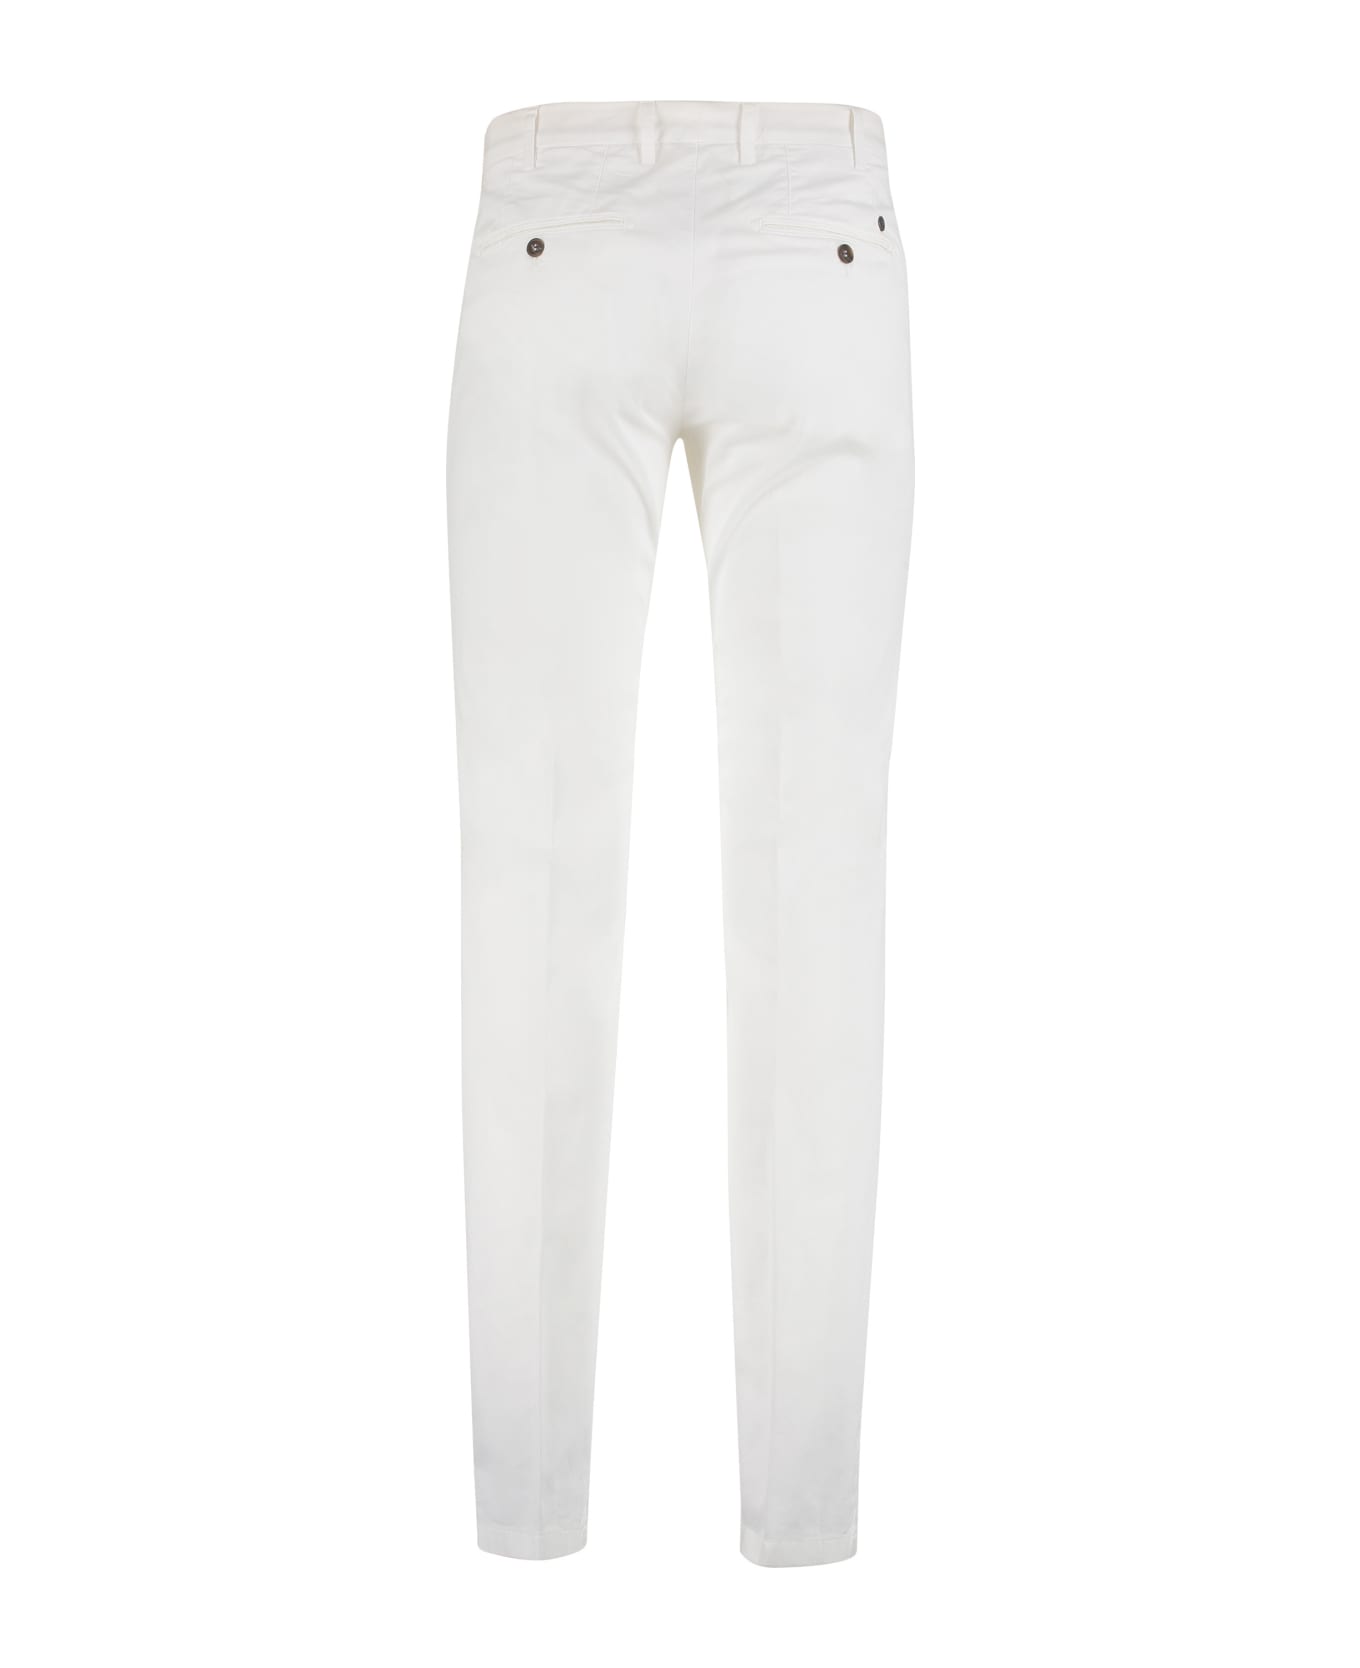 Canali Cotton Chino Trousers - White ボトムス